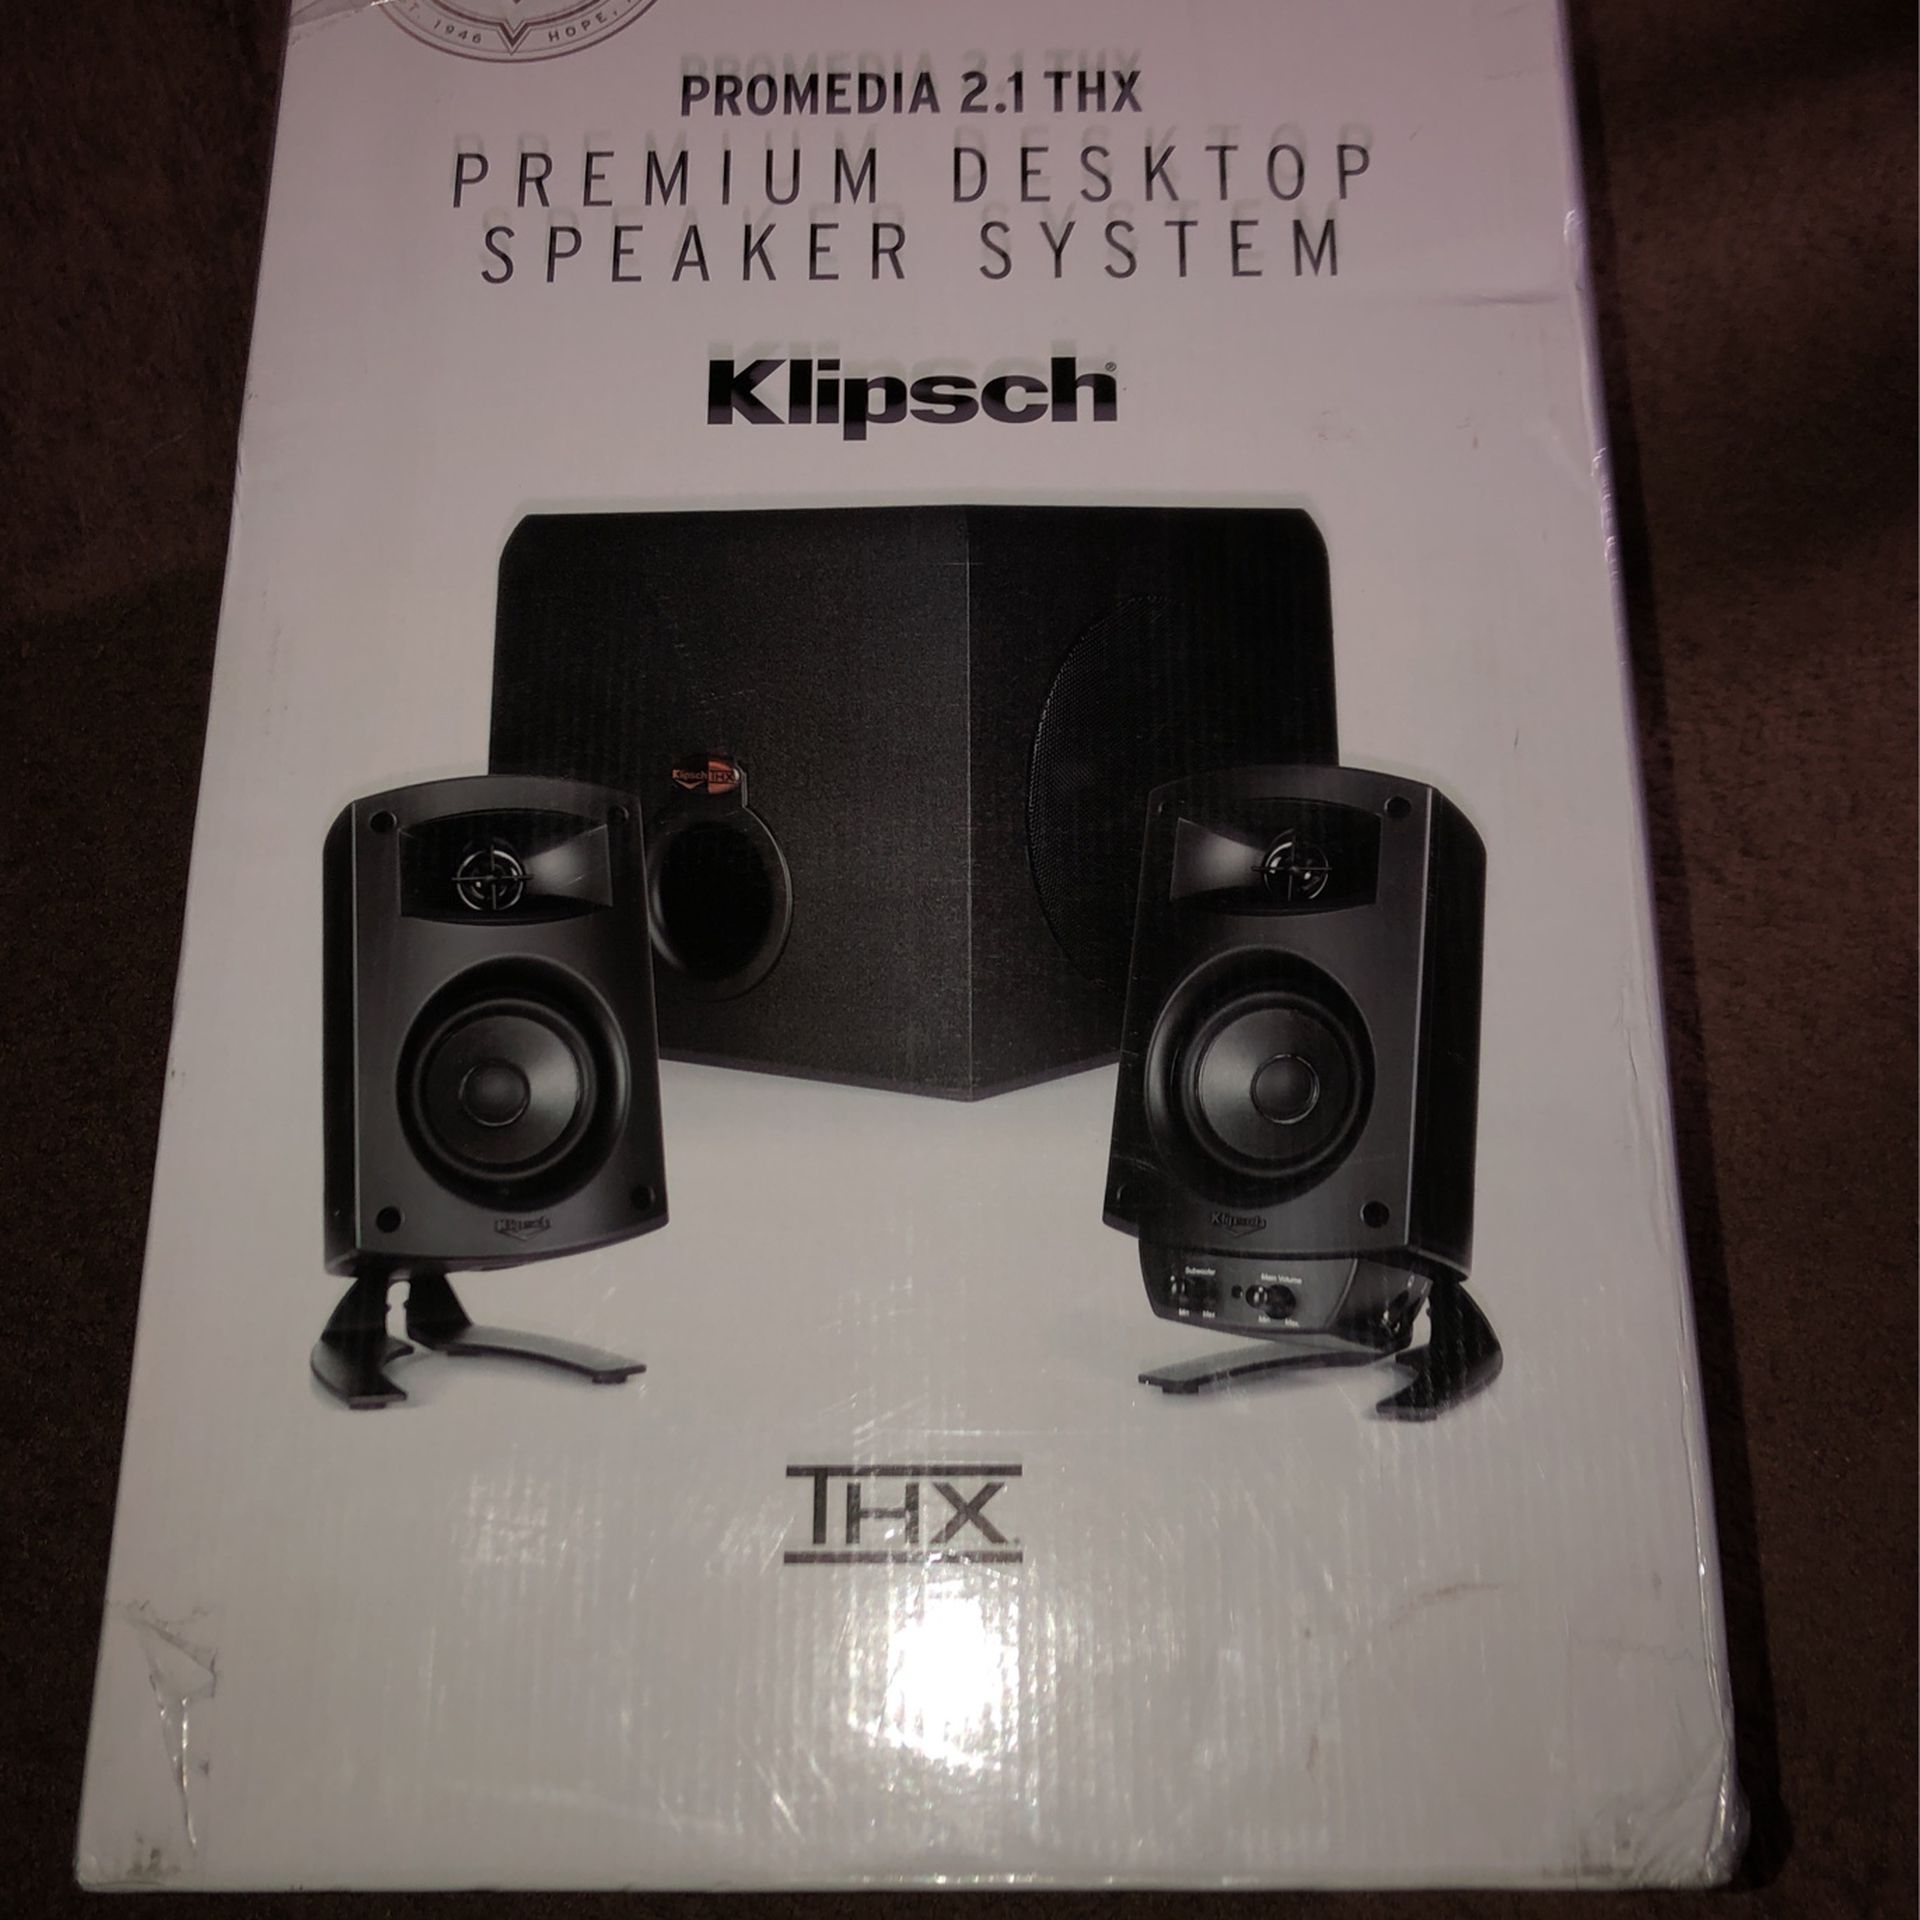 Klipsch Pro media 2.1 THX Premium Desktop Speaker System 